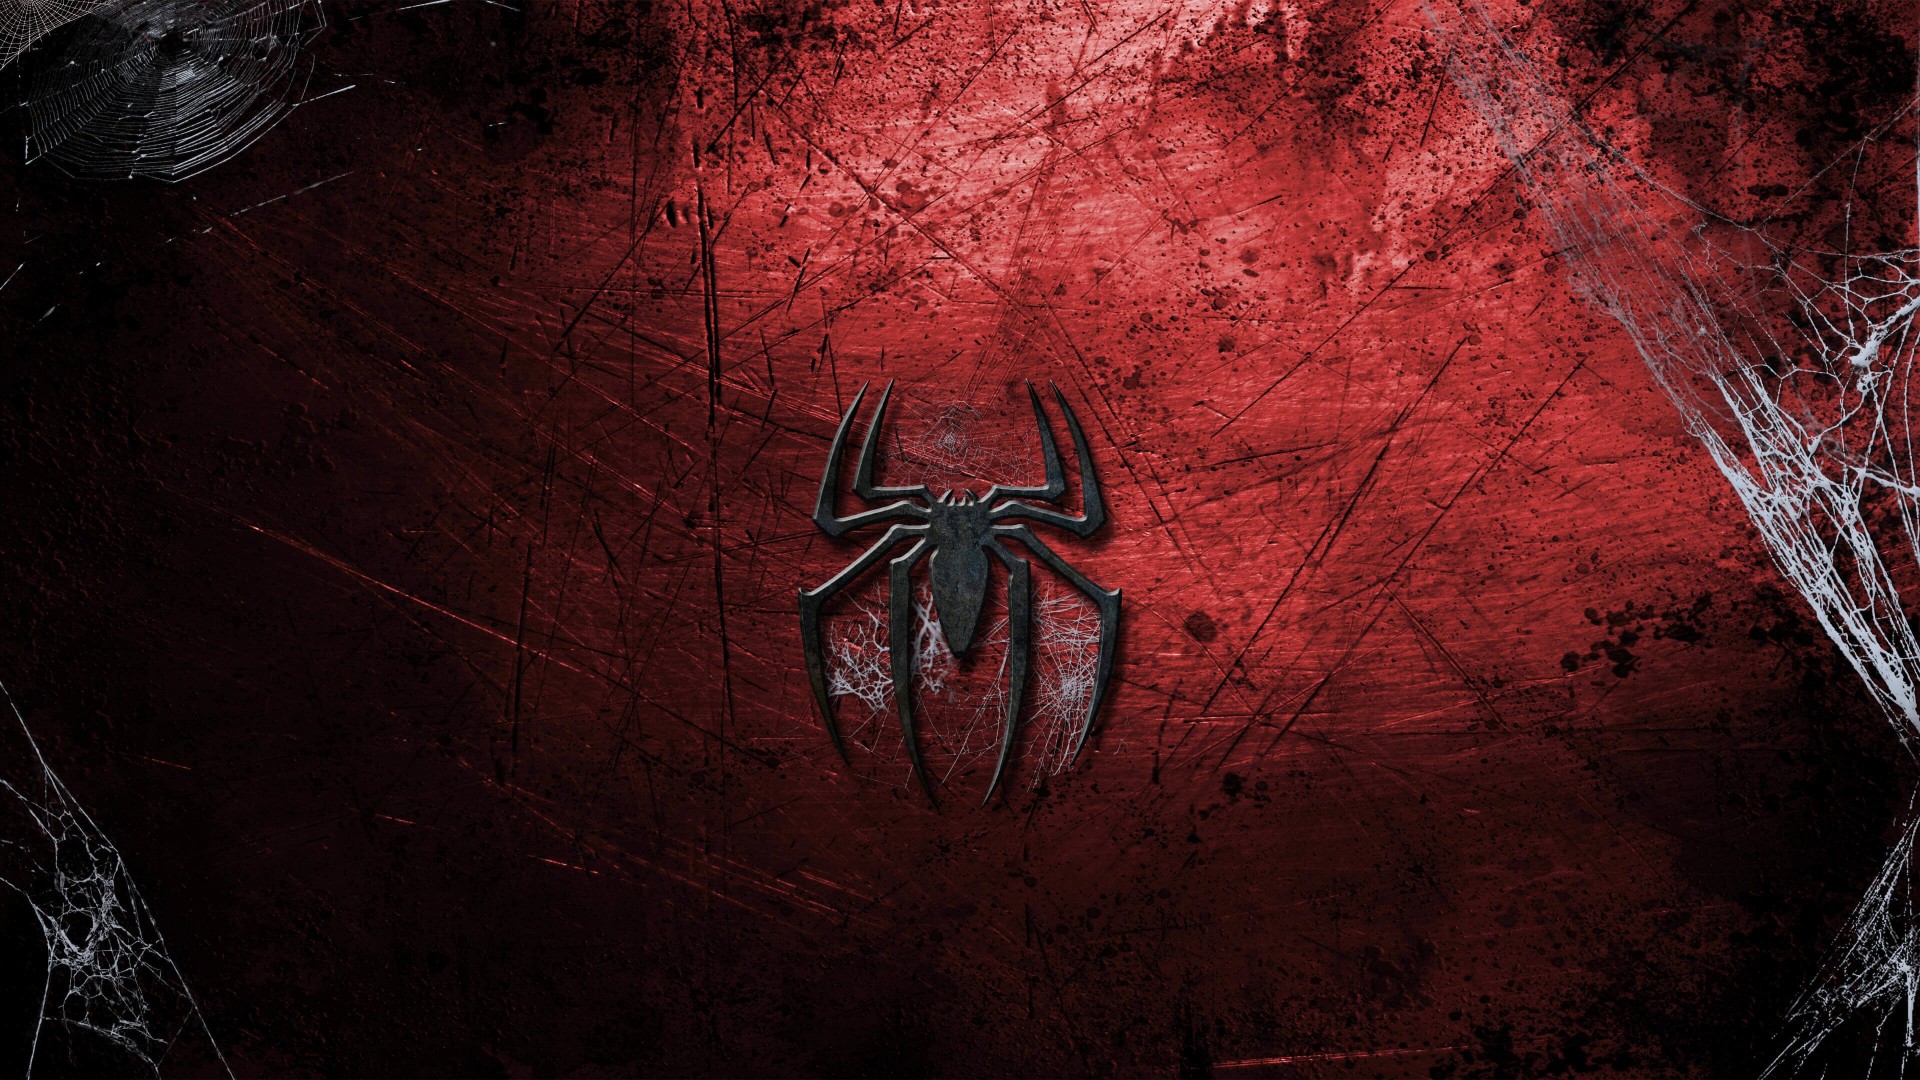 Grungy Spider-Man Logo Wallpaper for Desktop 1920x1080